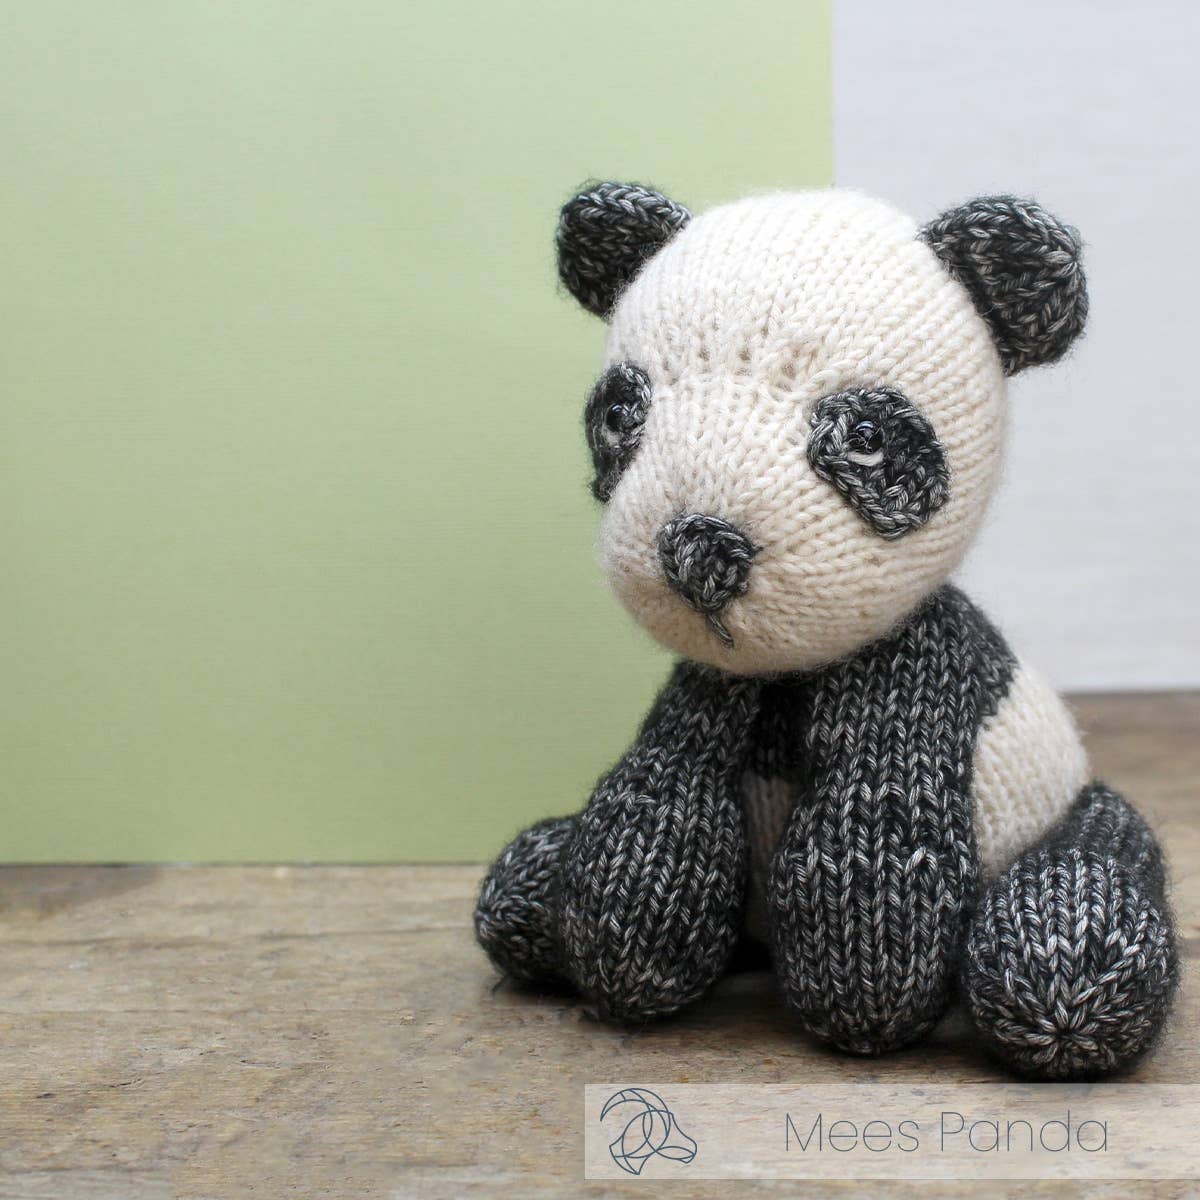 Hardicraft DIY Knitting Kit - Mees Panda Yarn